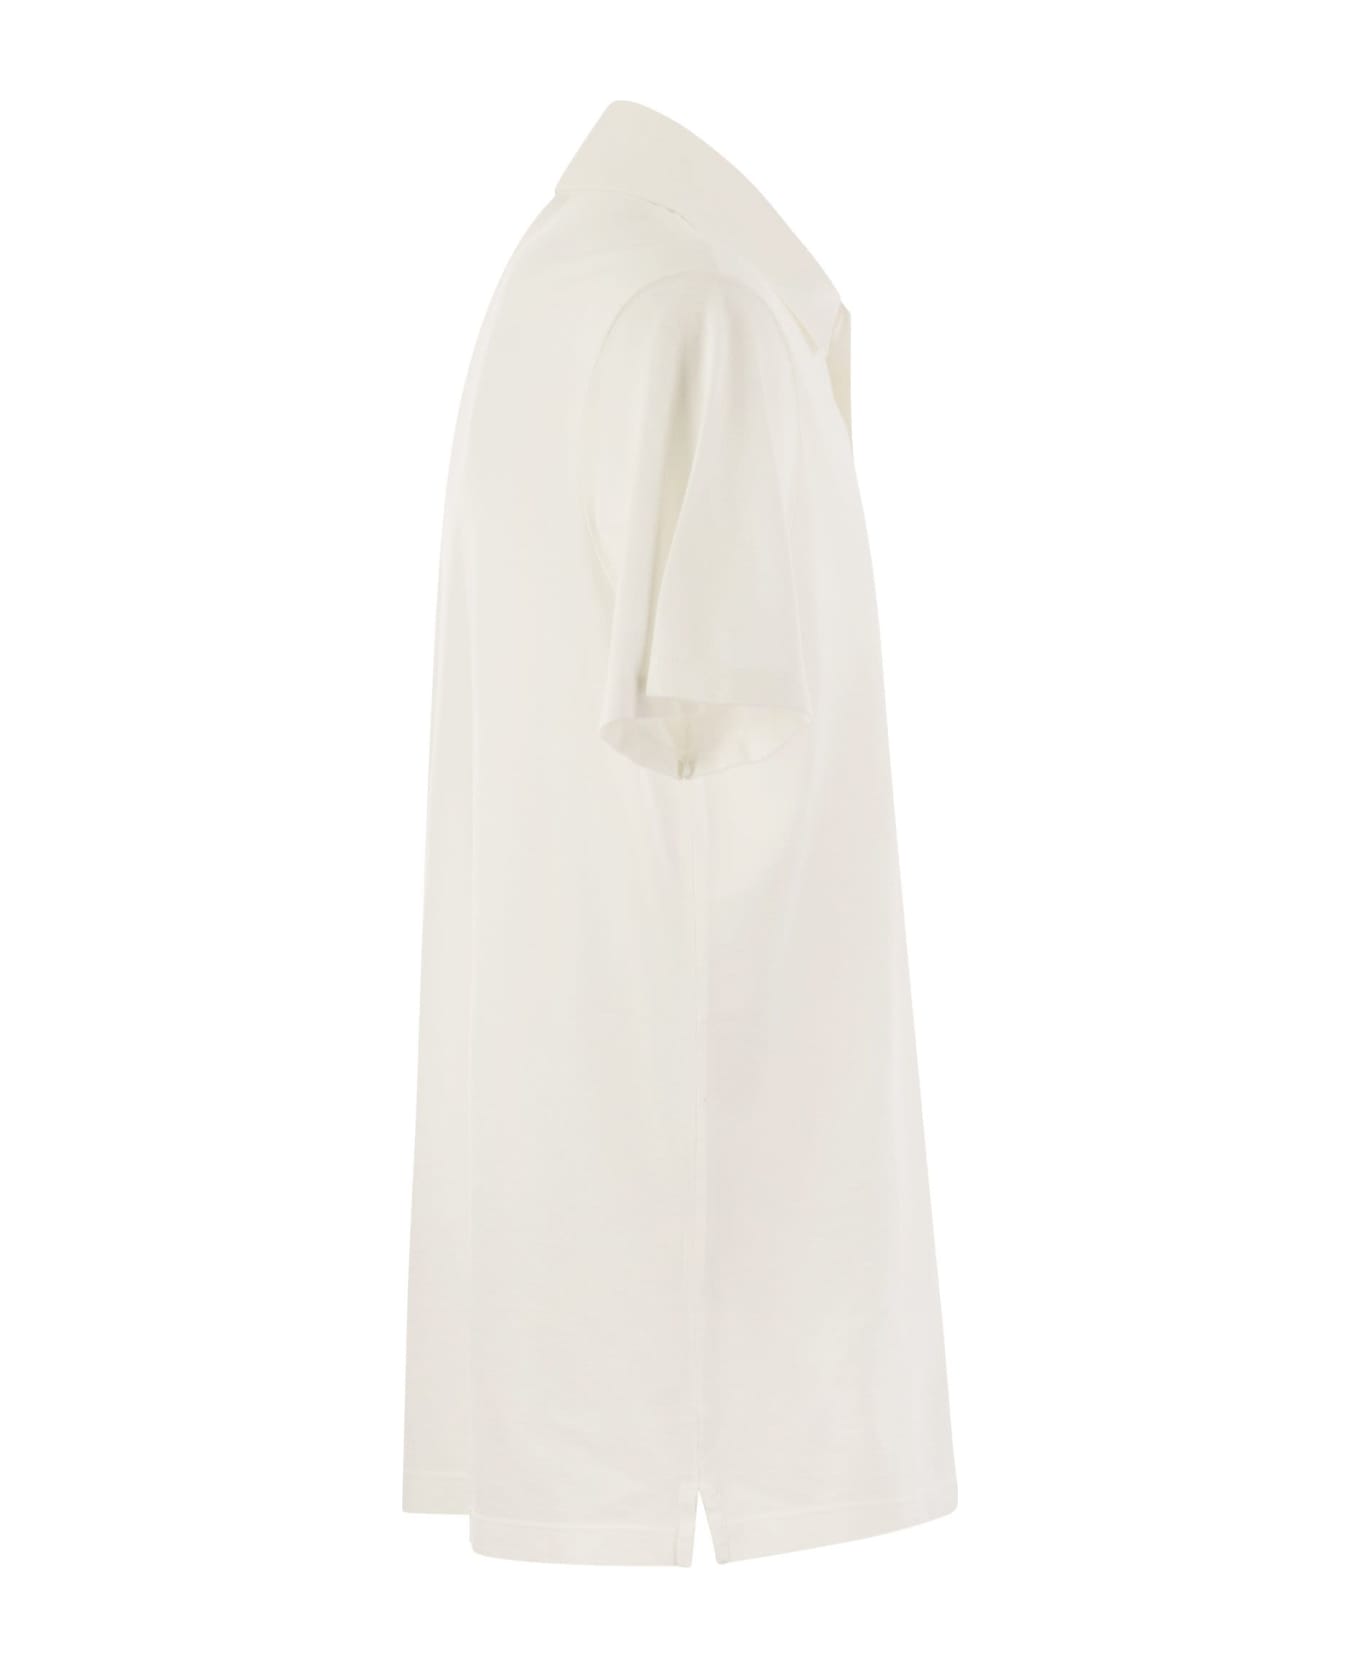 Paul&Shark Garment-dyed Pique Cotton Polo Shirt - White